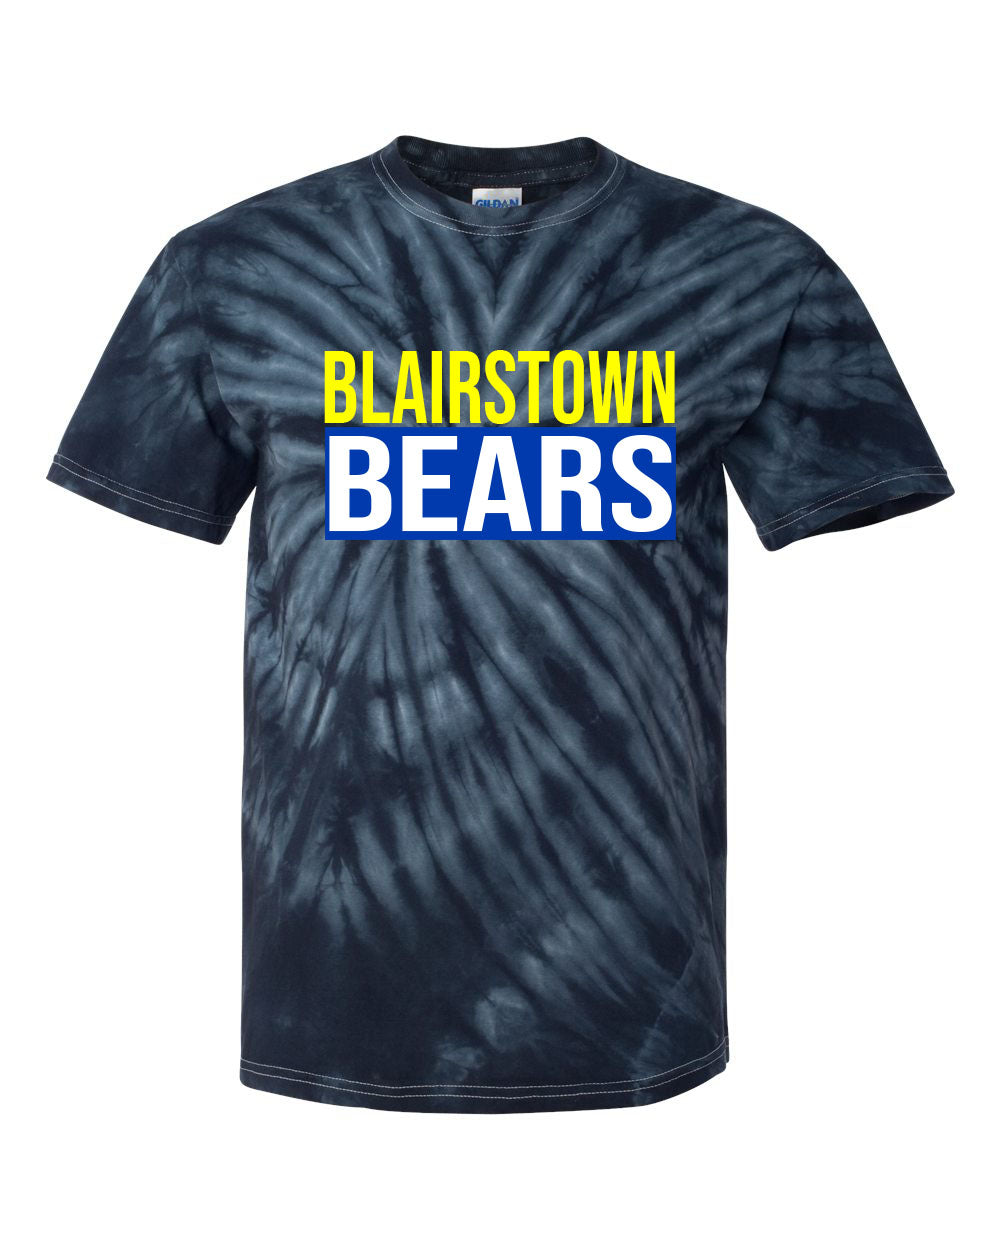 Blairstown Bears Tie Dye t-shirt Design 12